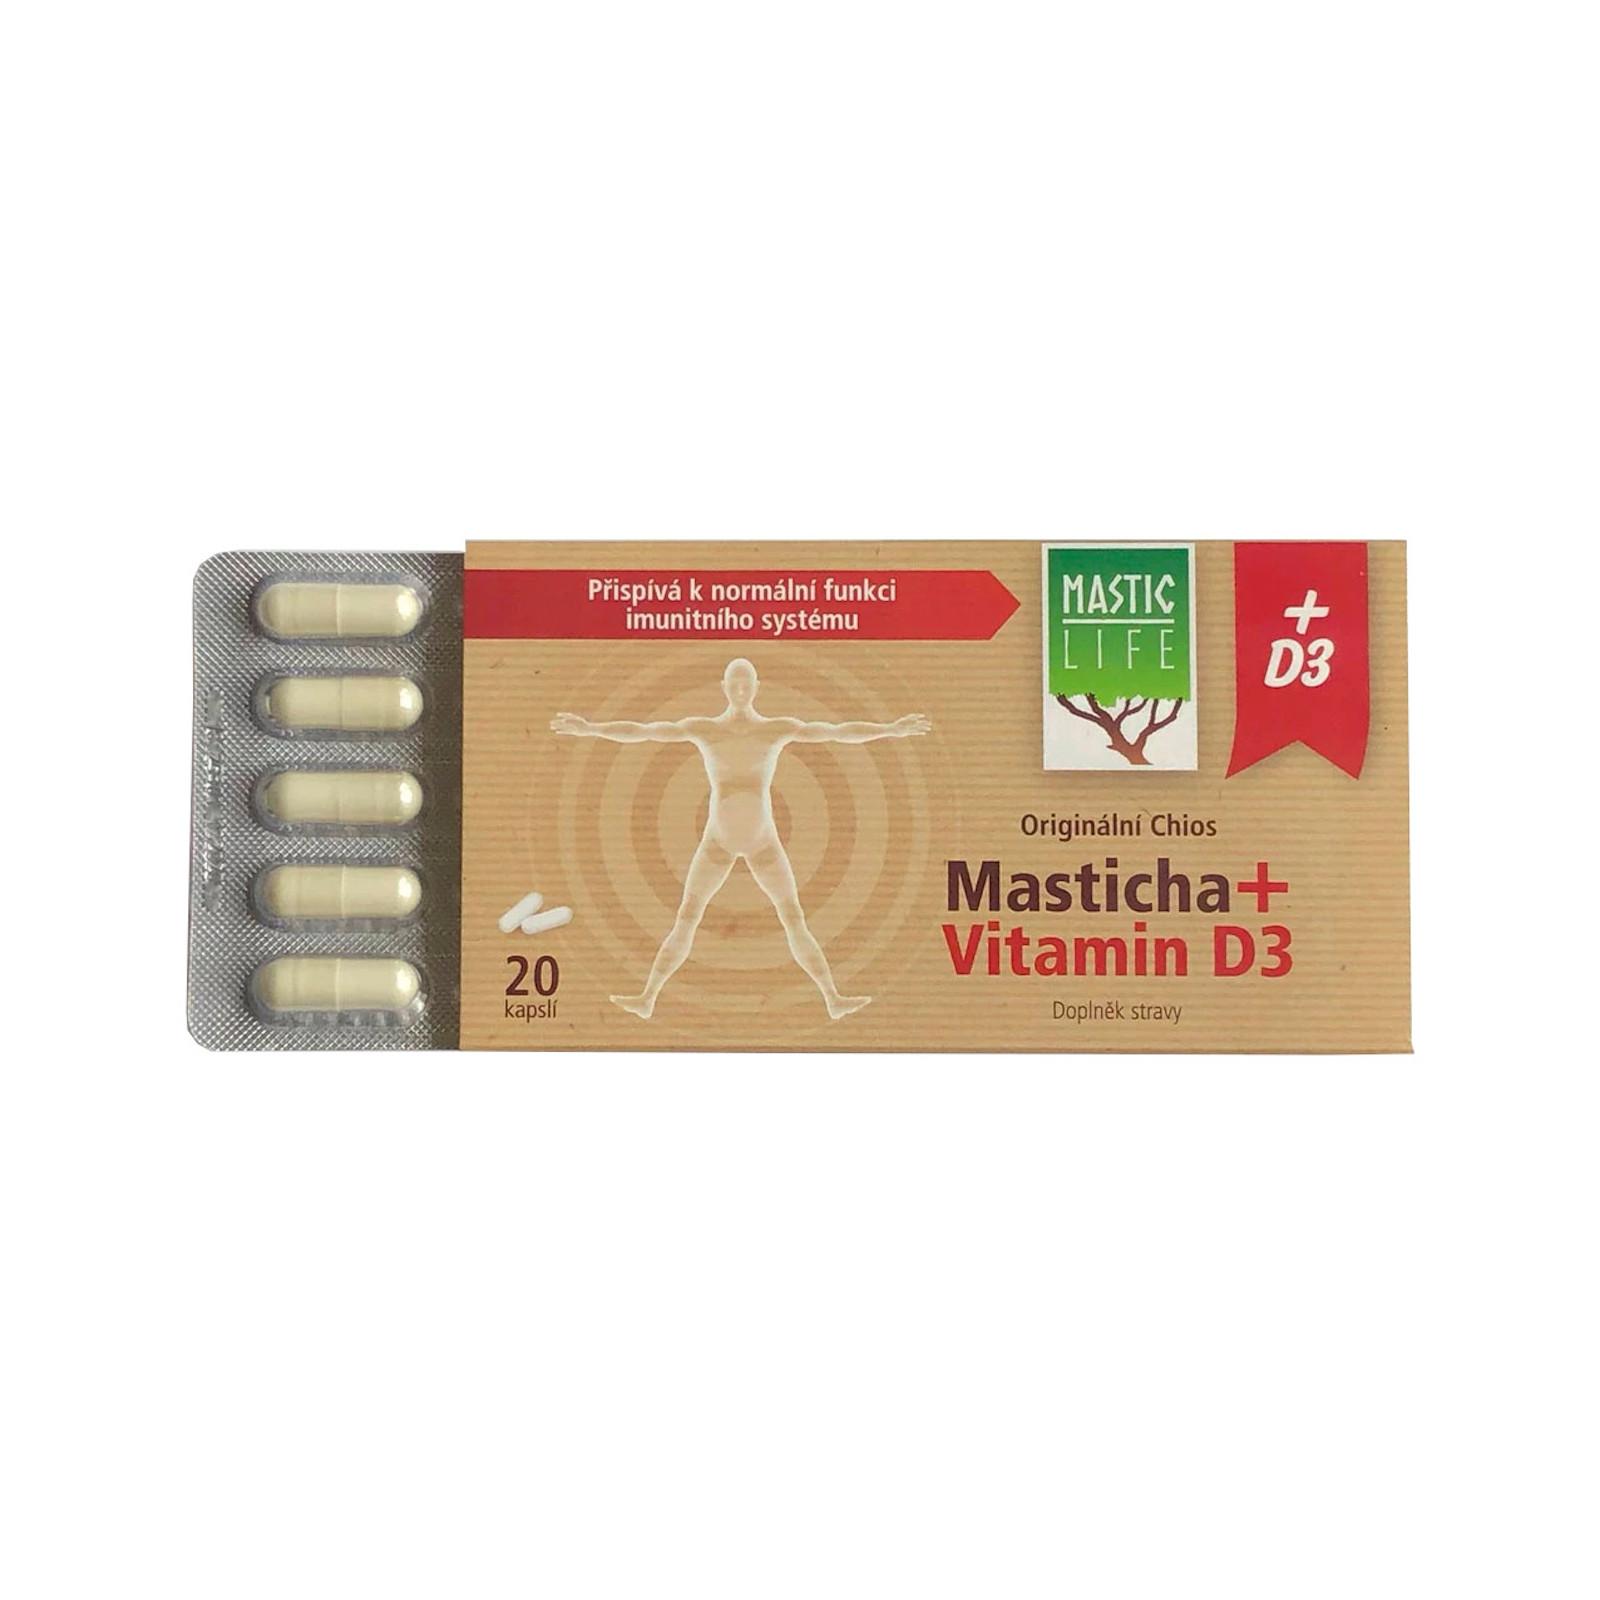 Masticlife Original Chios Masticha + Vitamin D3, kapsle 20 ks, 8,8 g